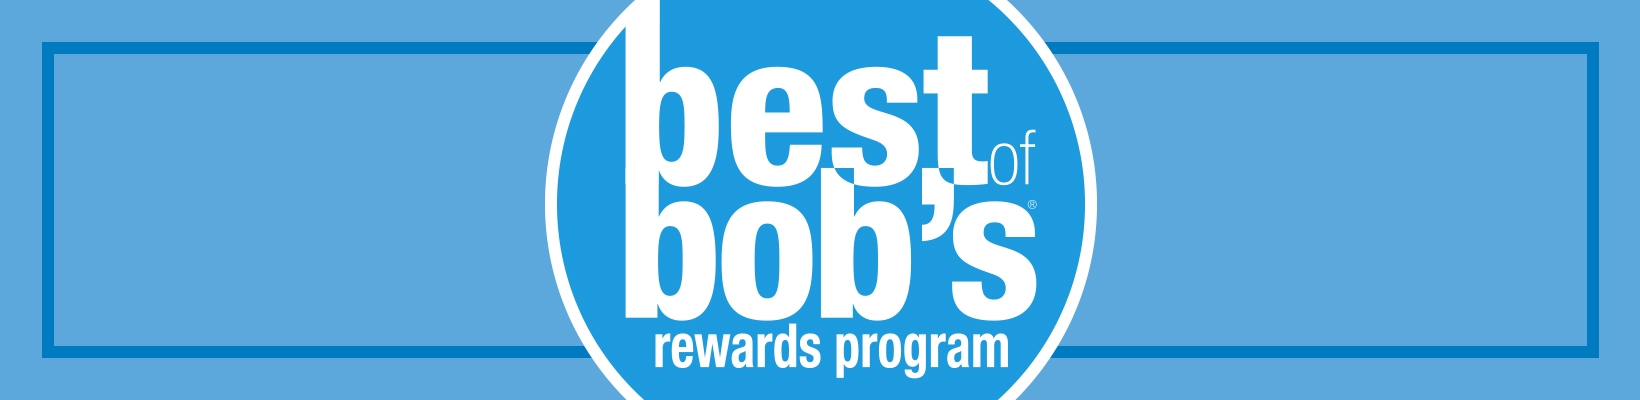 Join the best of bob’s reward program